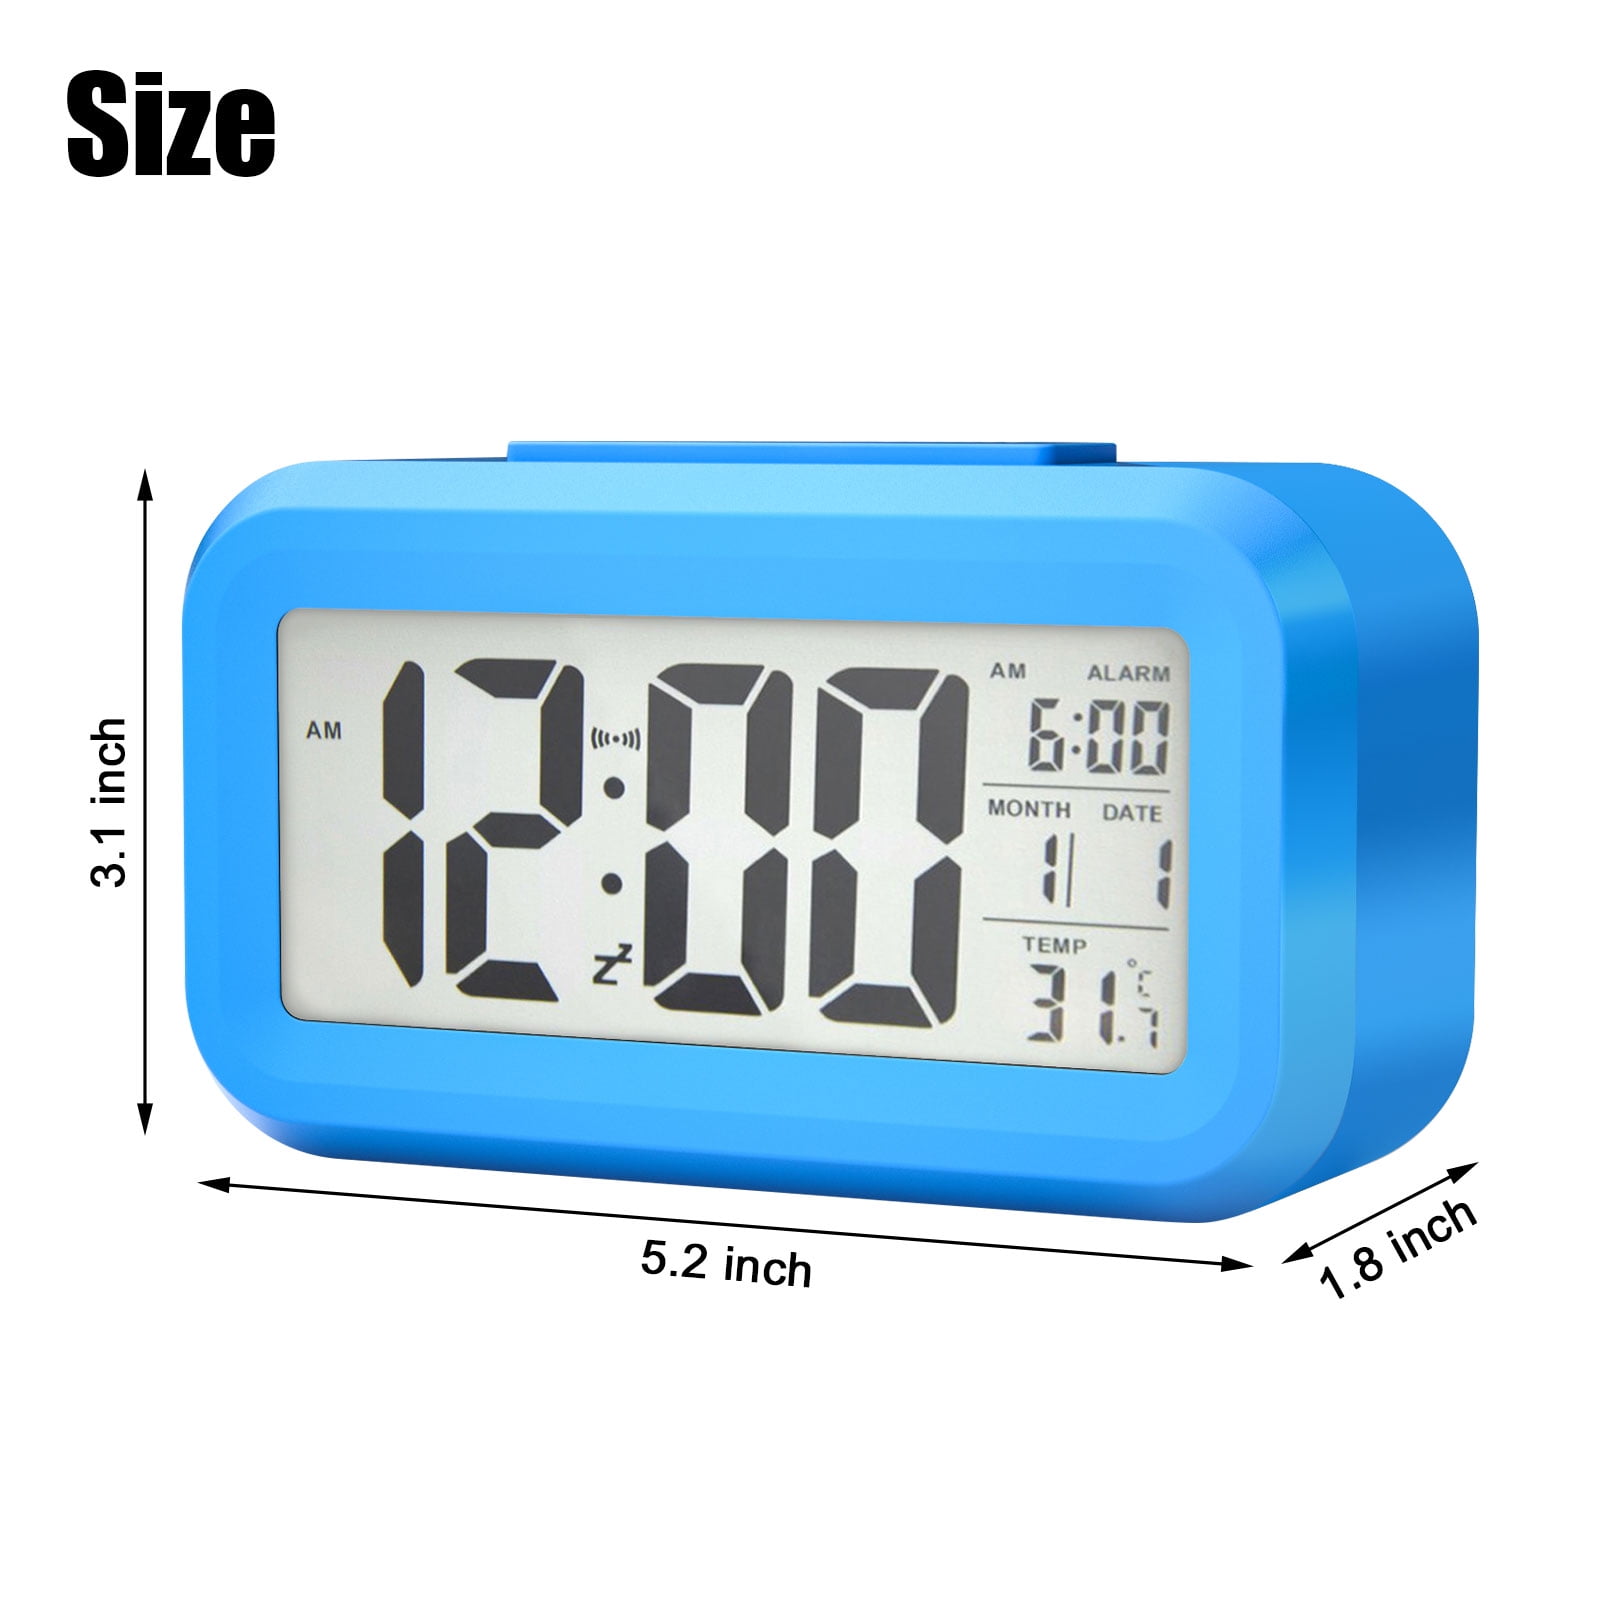 Details about    LED Digital Alarm Clock Time Thermometer Calendar Backlight Snooze Sleep Timer 